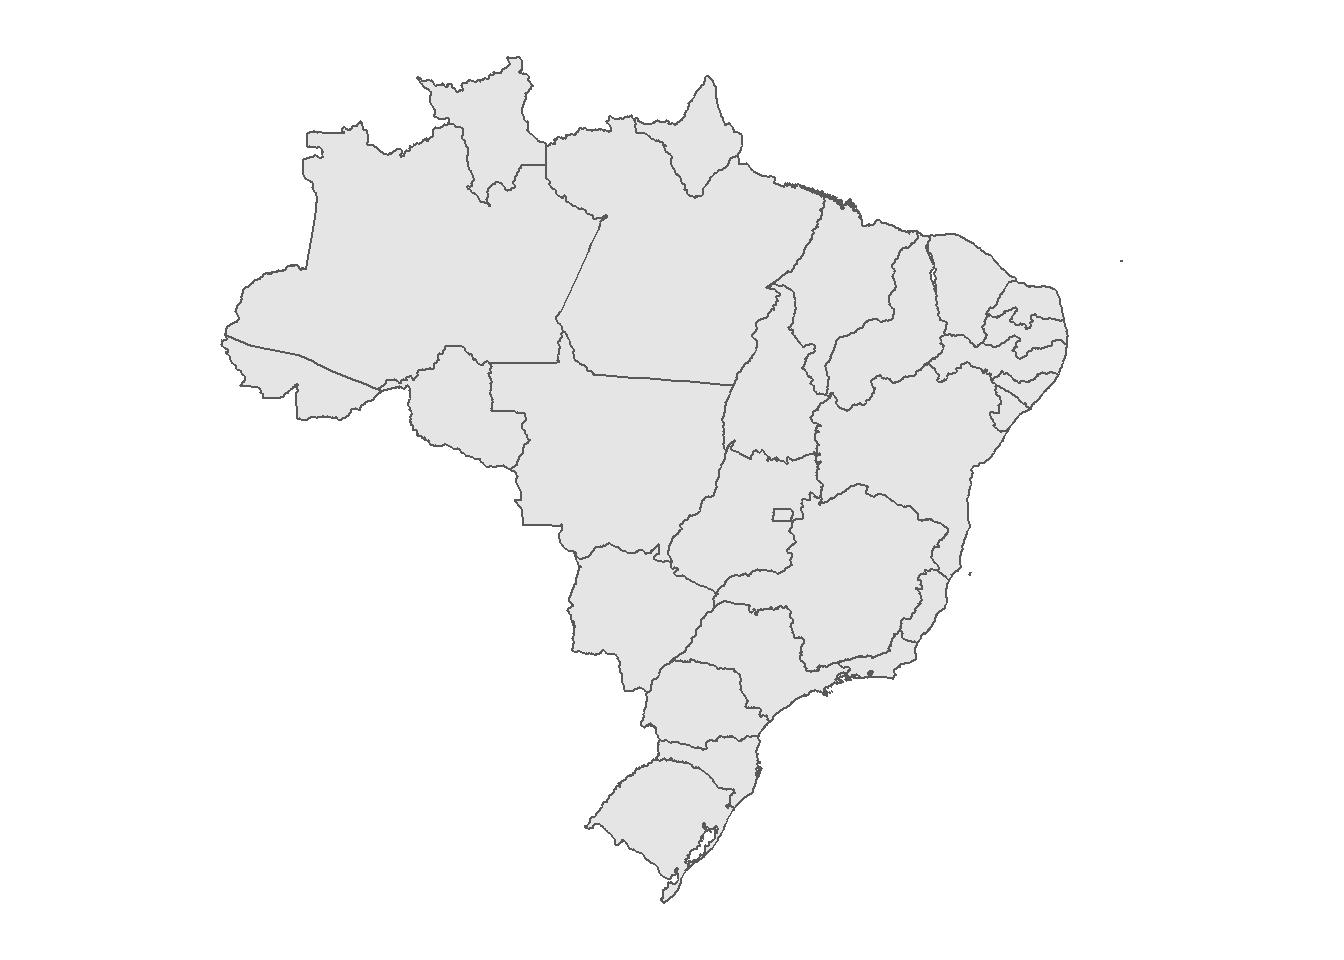  Mapa de los estados de Brasil